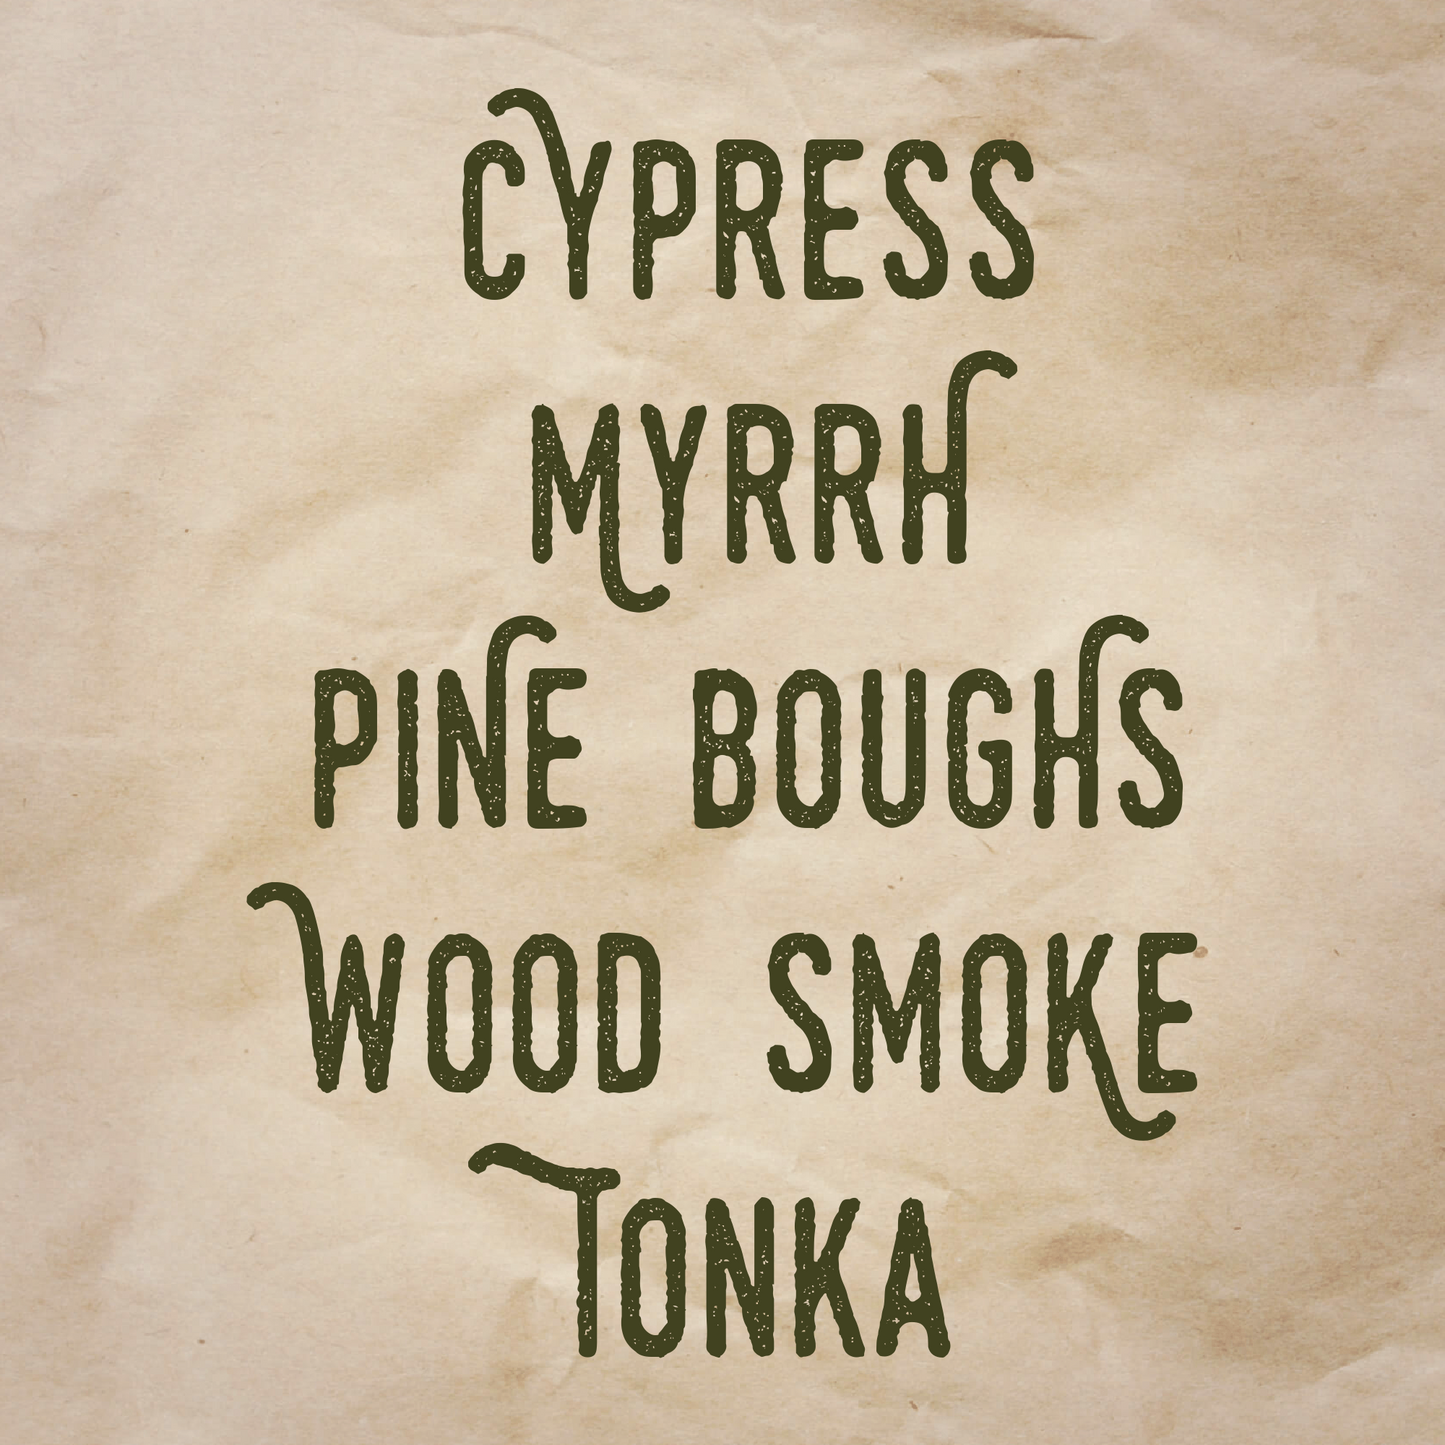 Noonwraith scent notes: Cypress, myrrh, pine boughs, wood smoke, and tonka.